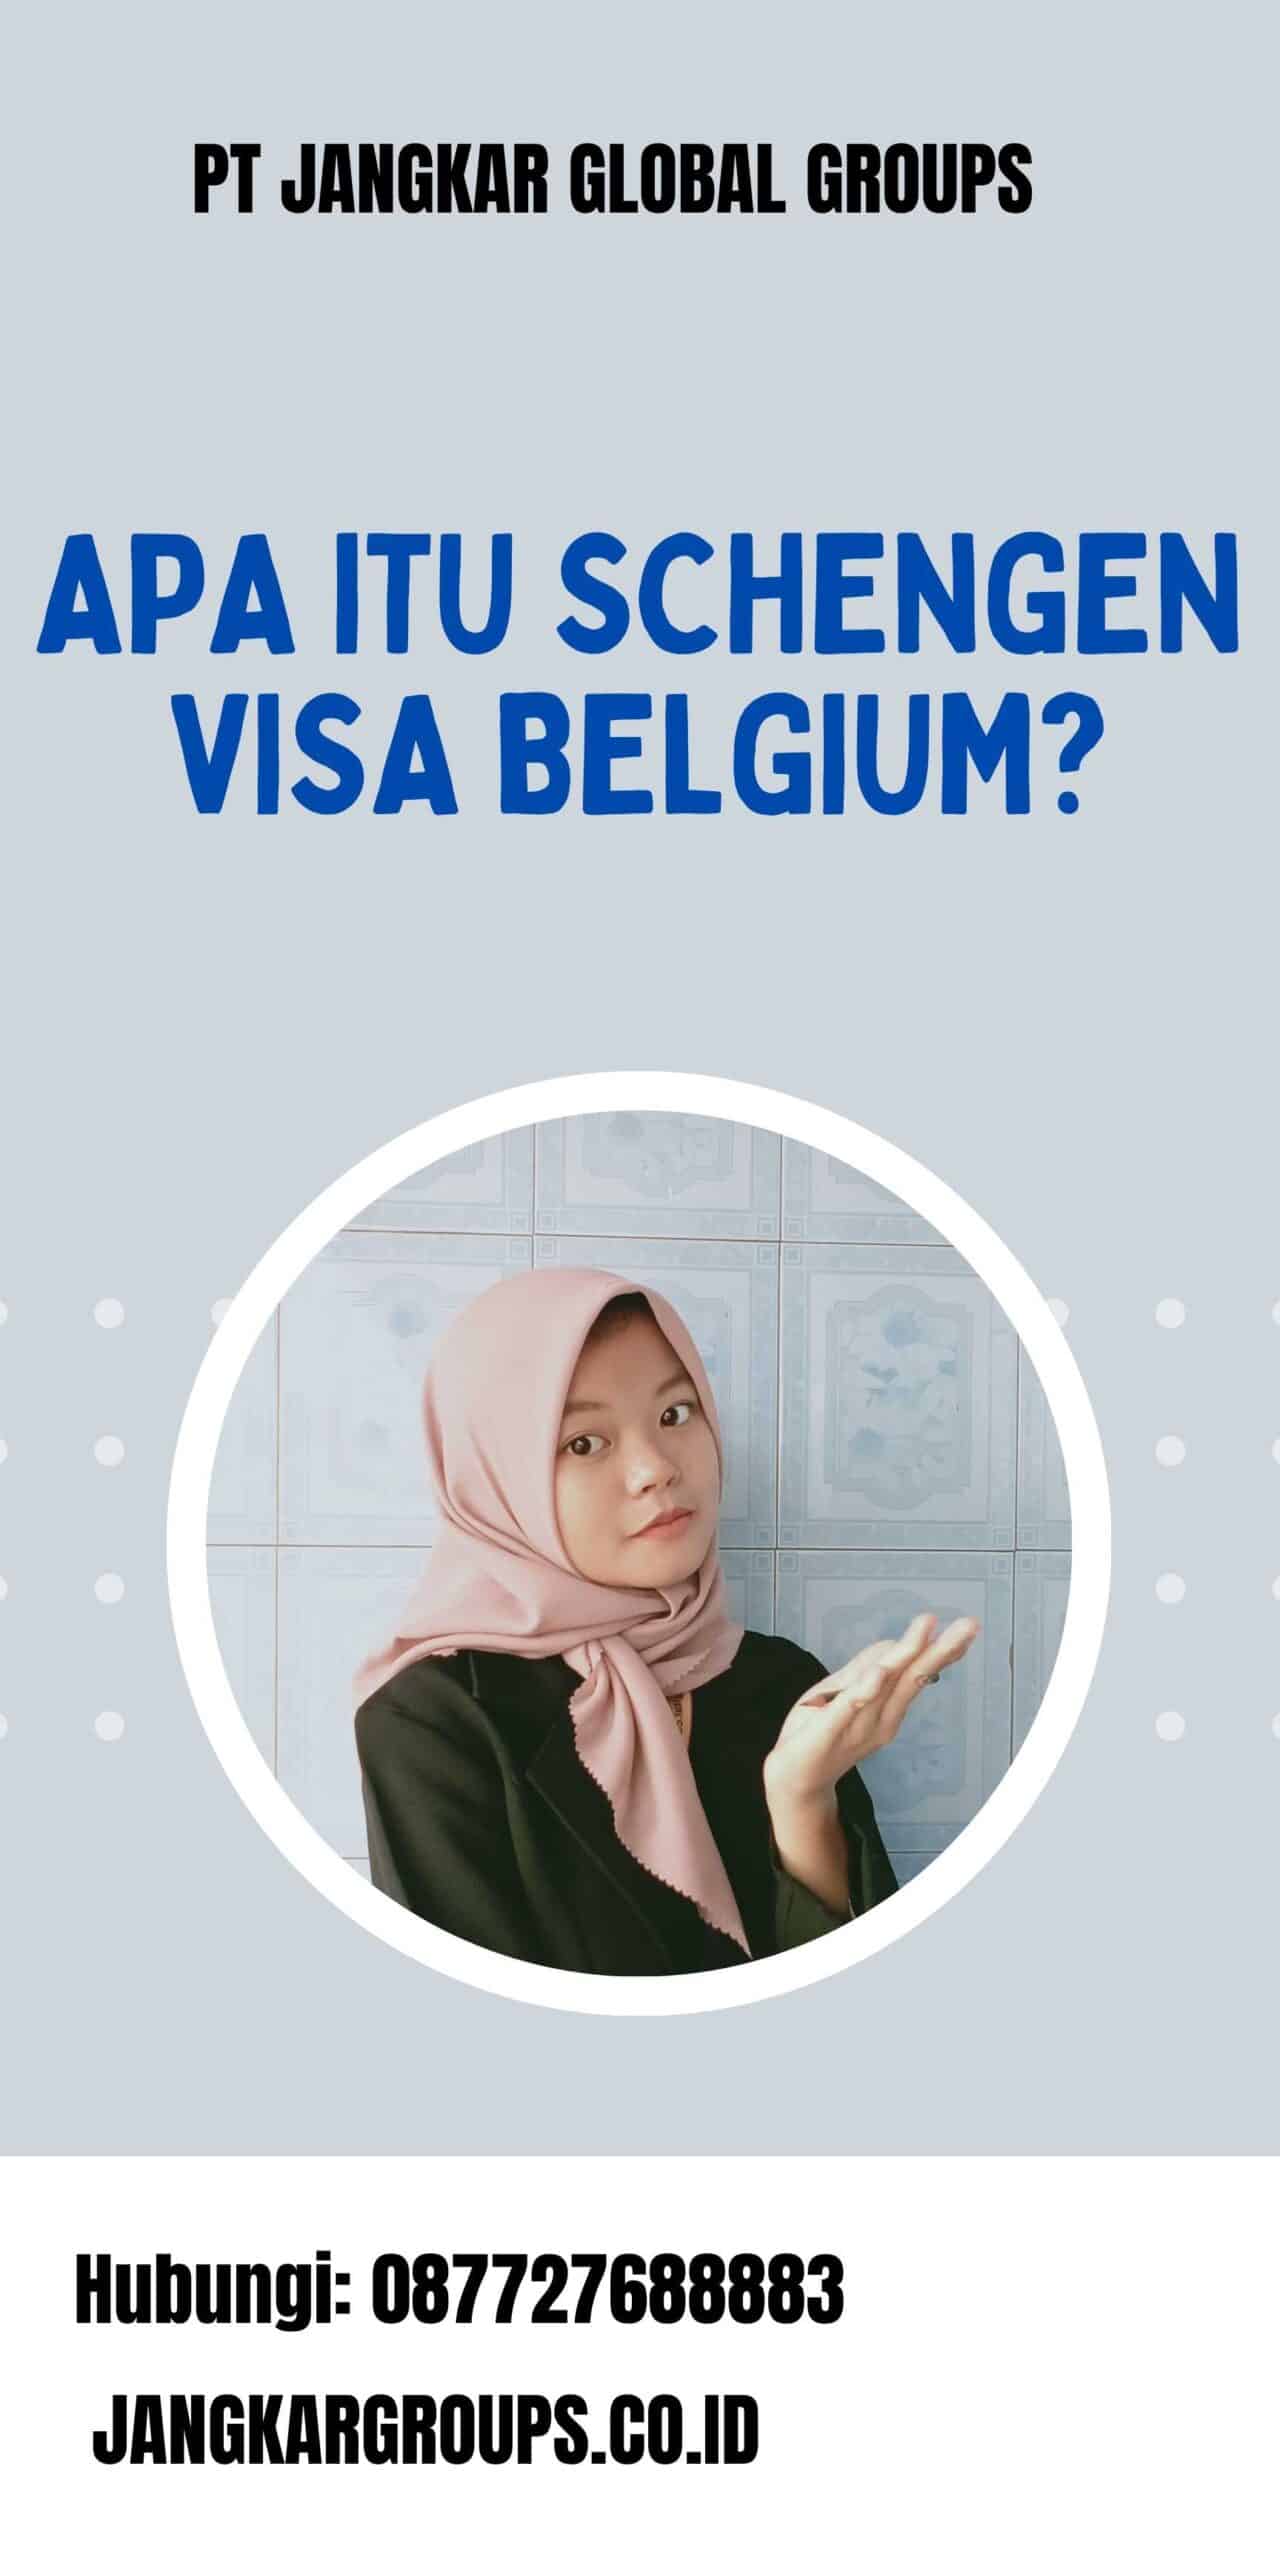 Apa itu Schengen Visa Belgium